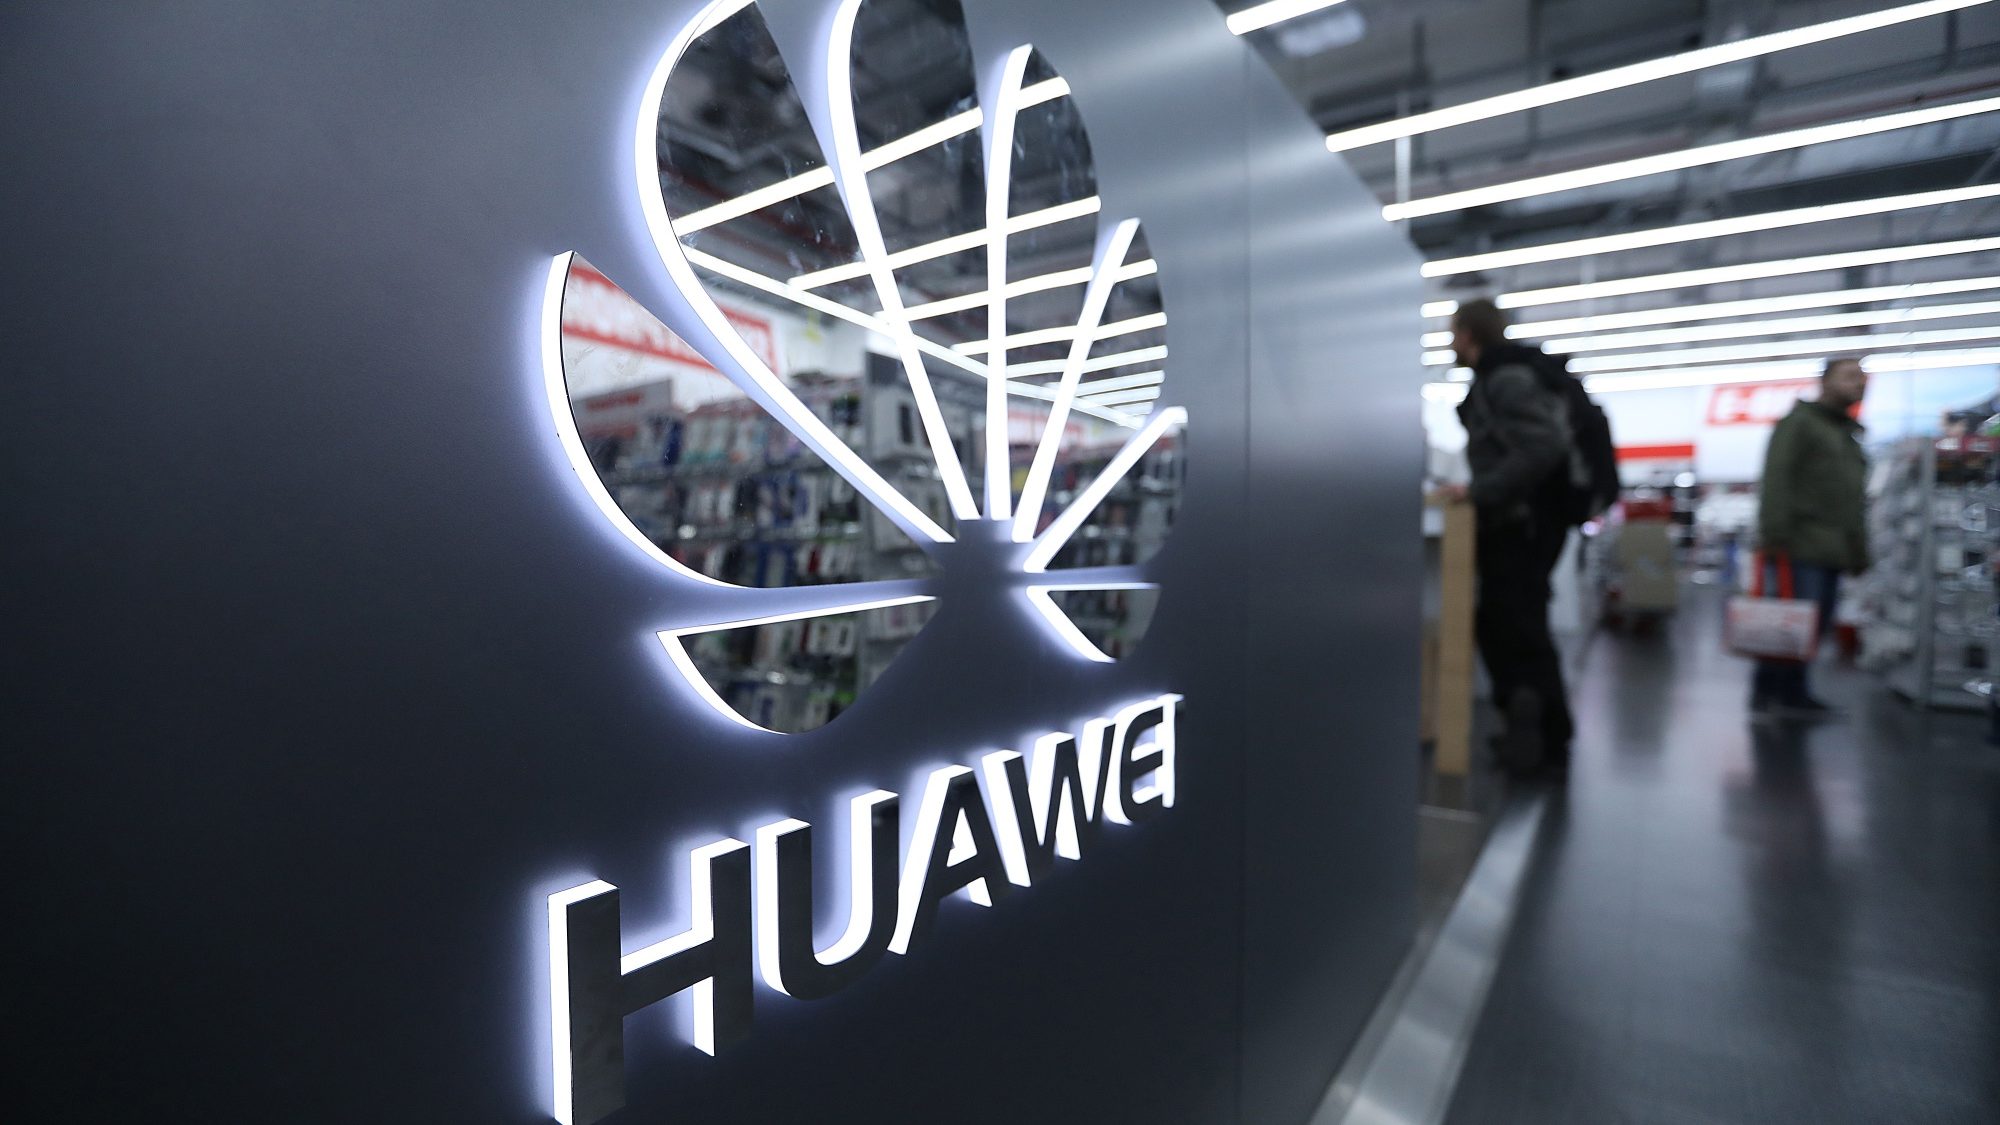 Huawei ban USA Google Android alternative